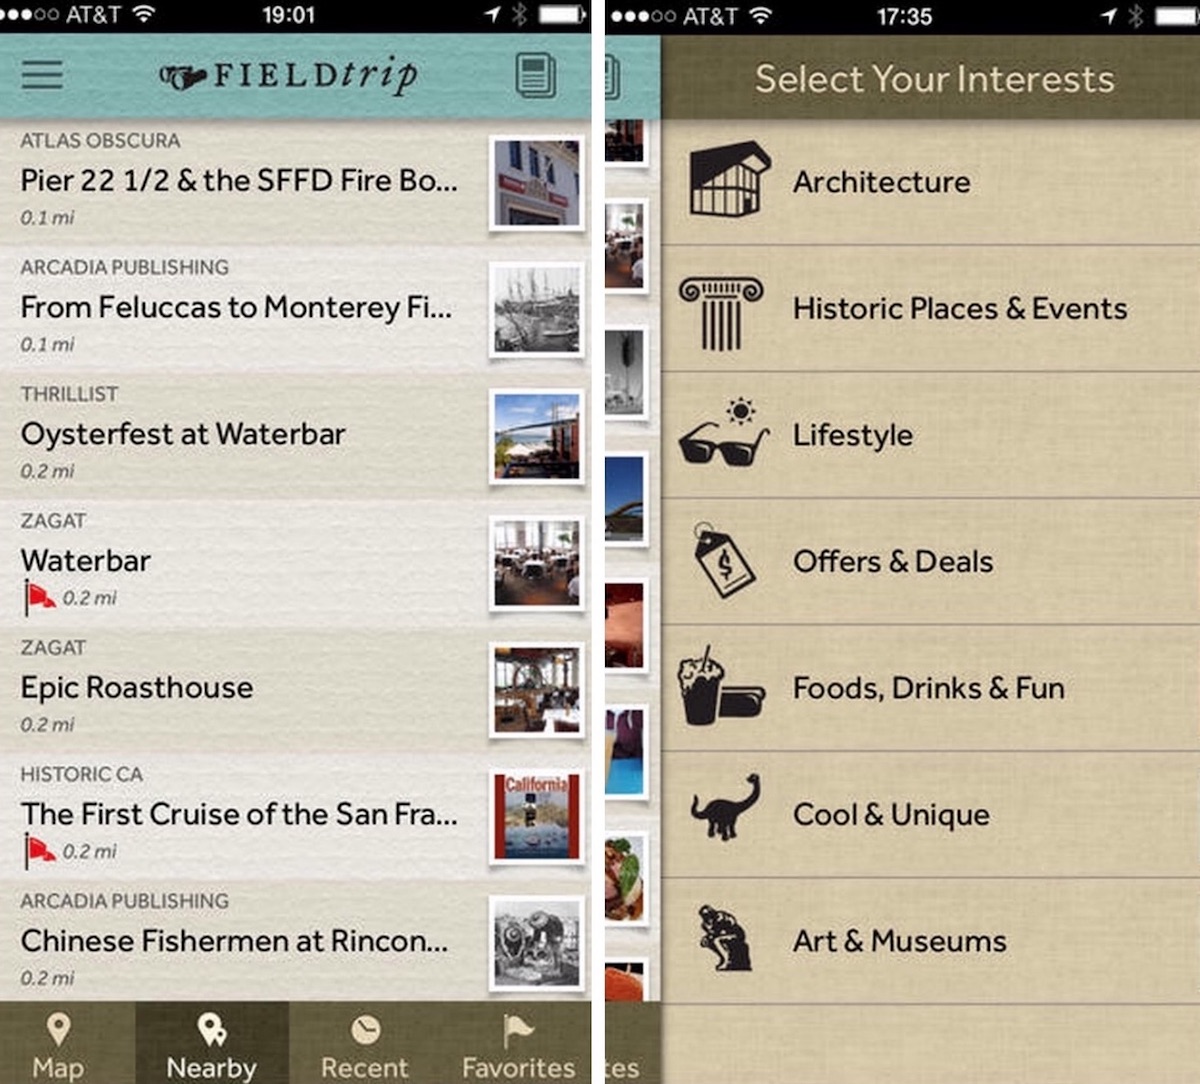 FieldTrip App - Best Travel Planning Apps